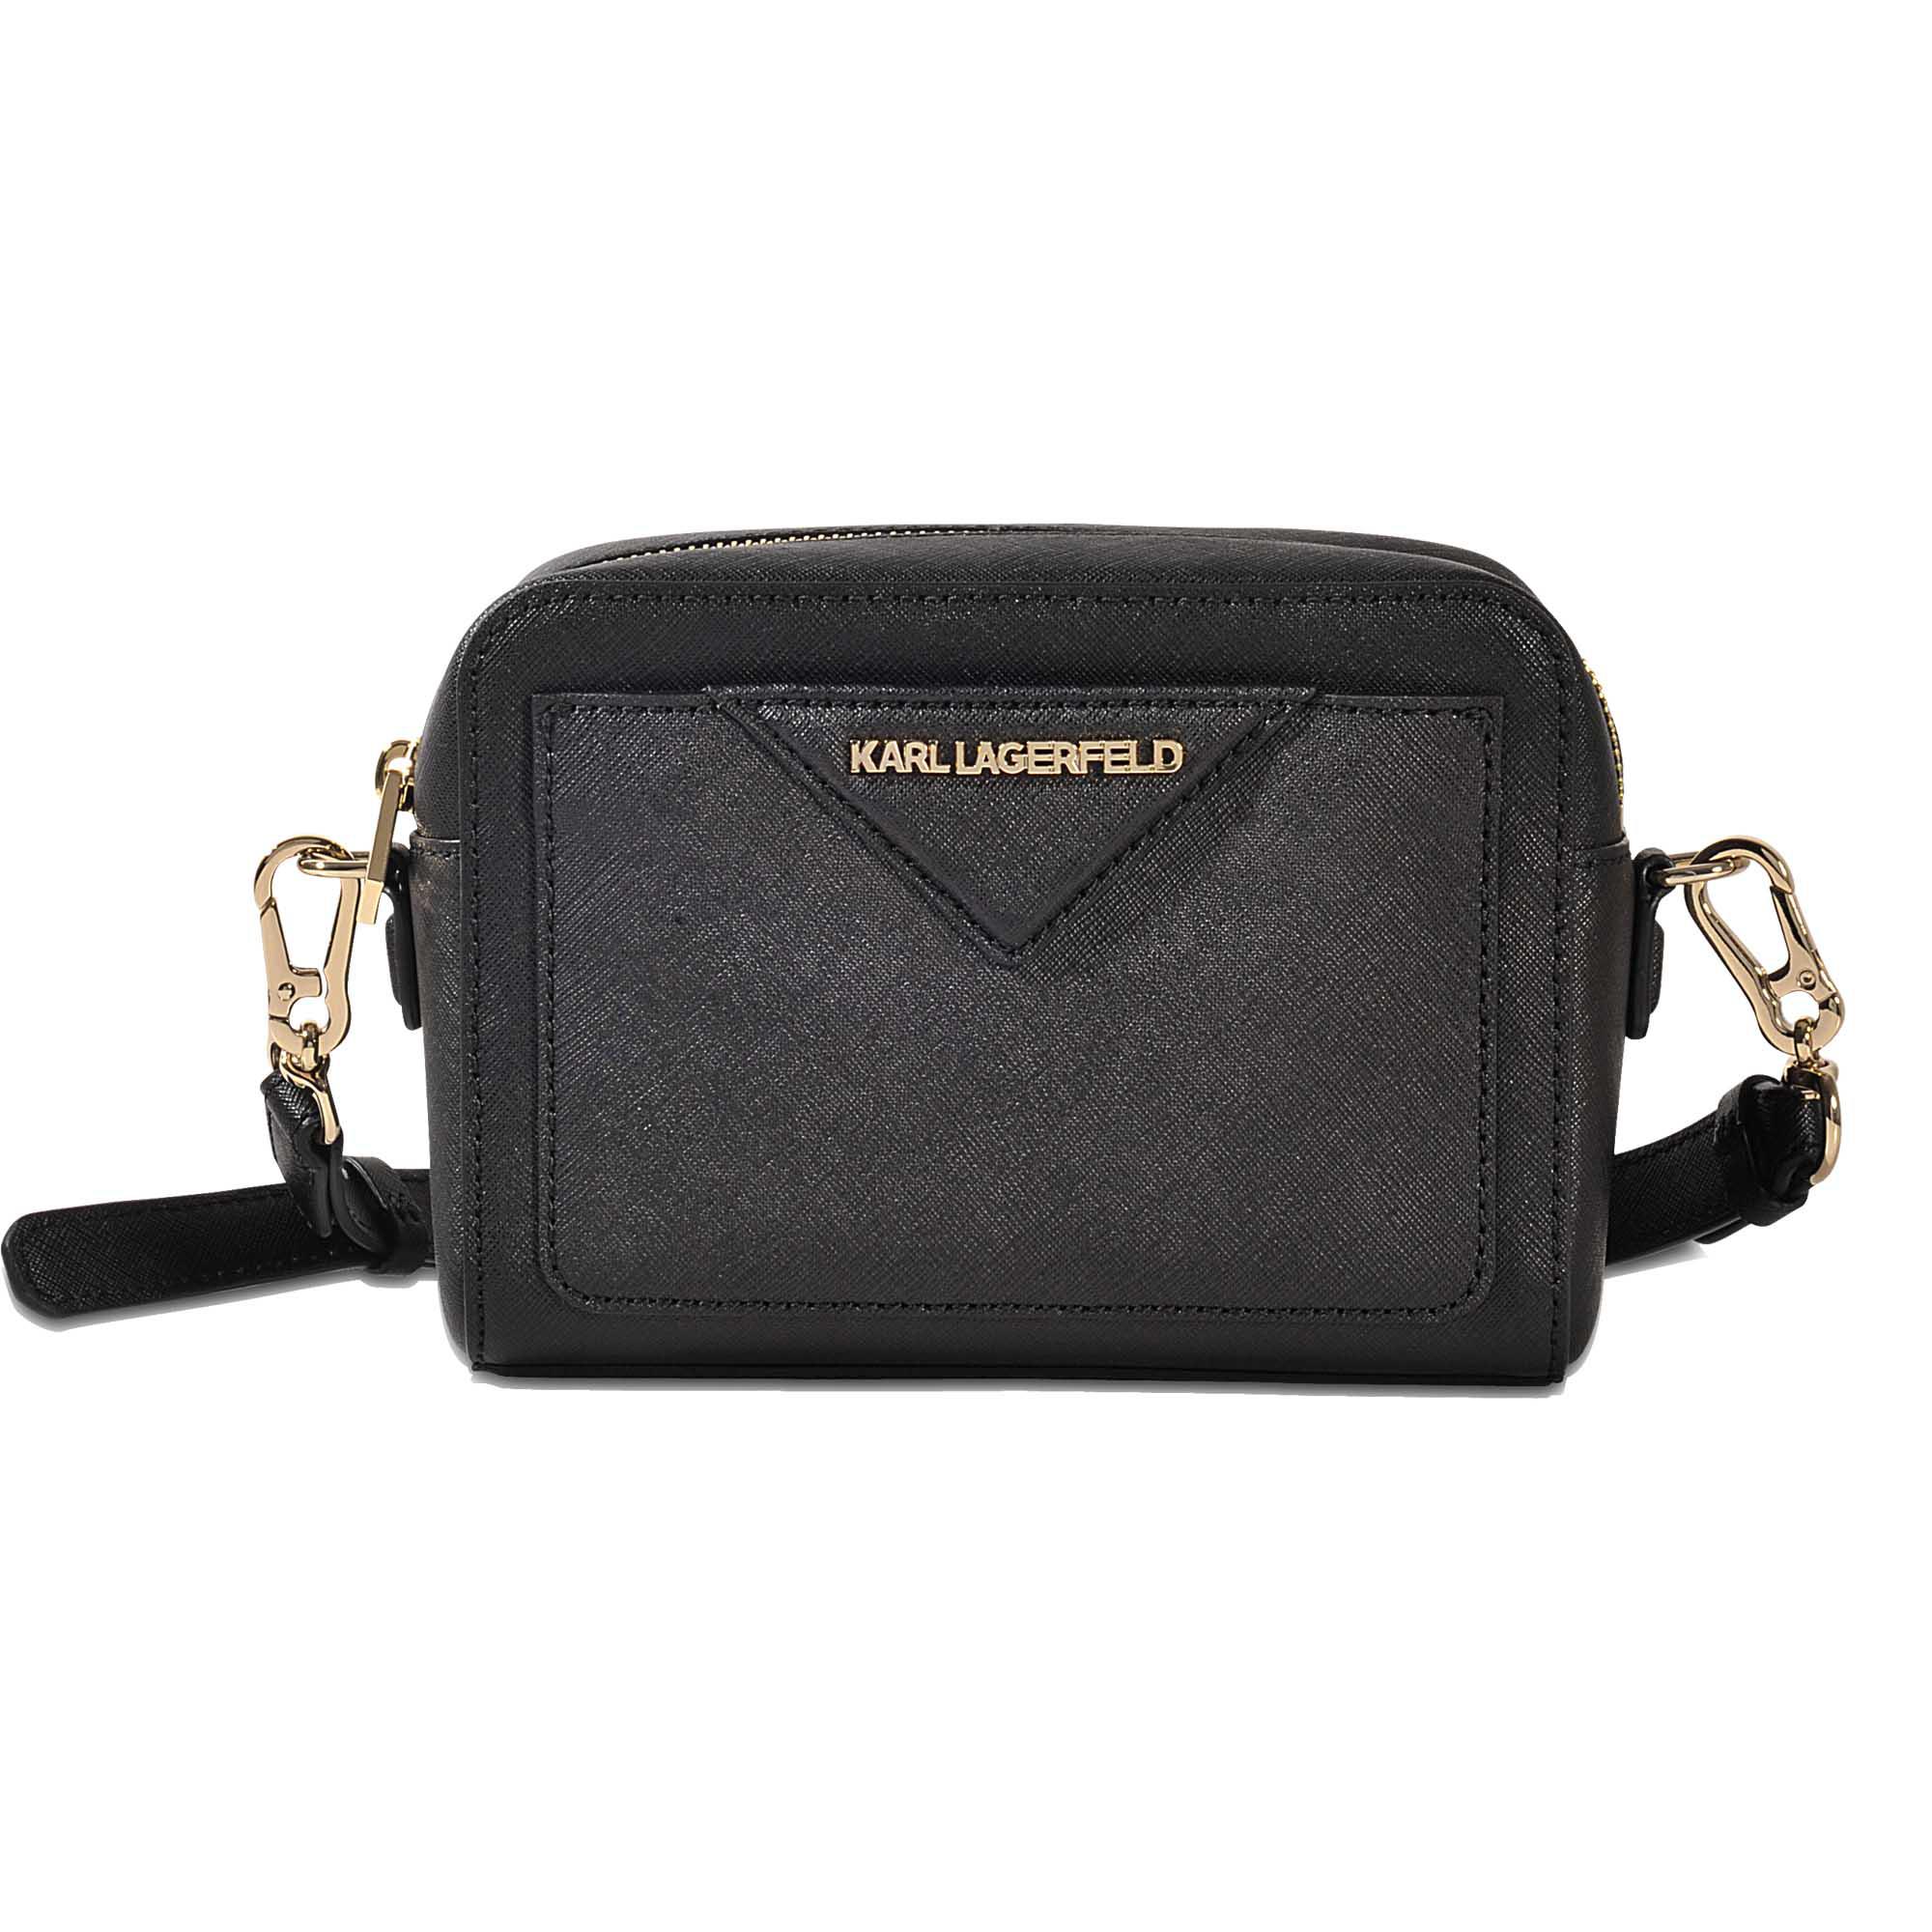 Karl Lagerfeld Leather K/klassik Camera Bag in Black - Lyst